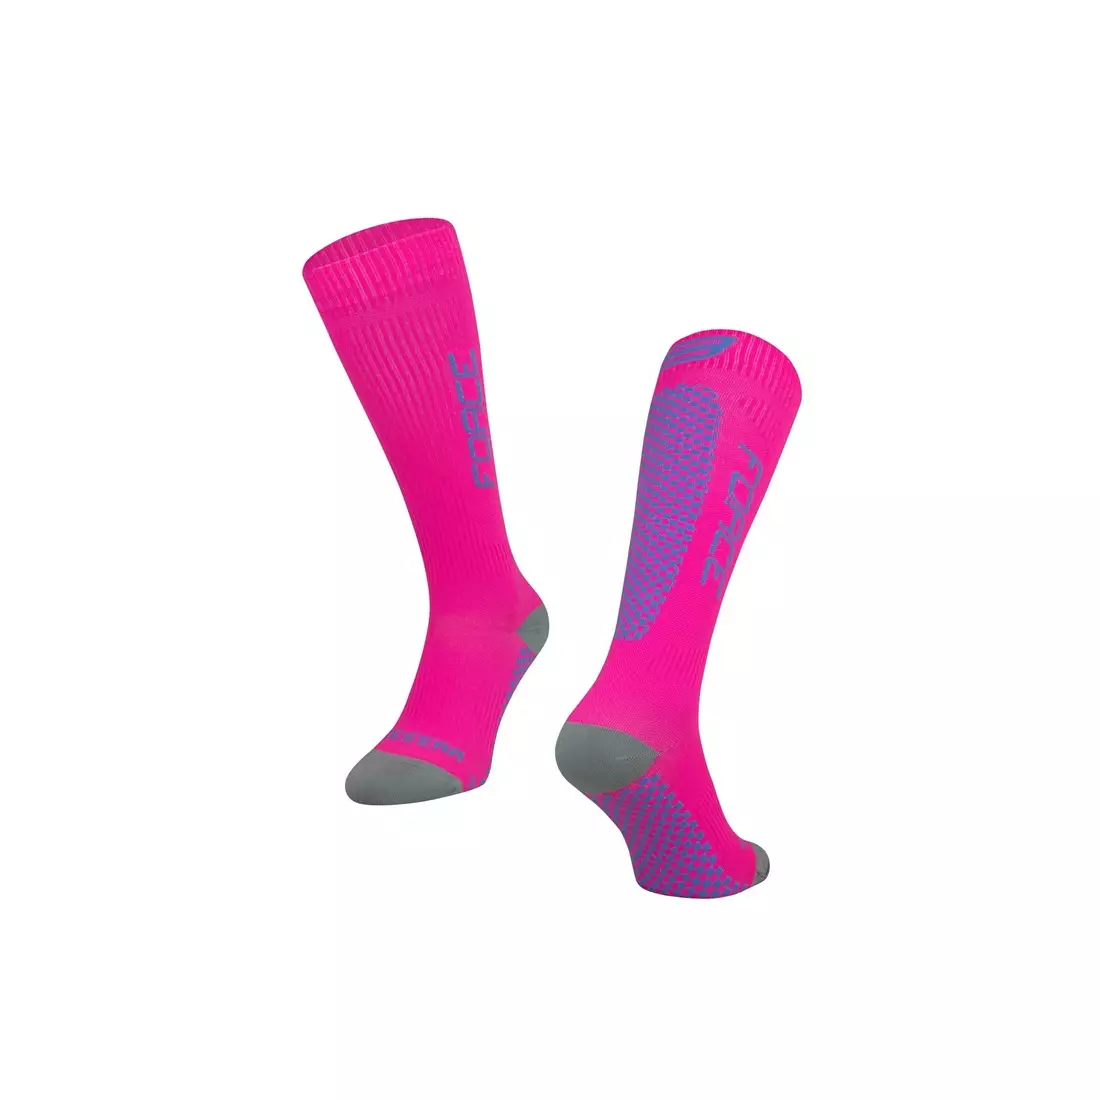 FORCE TESSERA COMPRESSION kompressziós zokni, rózsaszín-lila